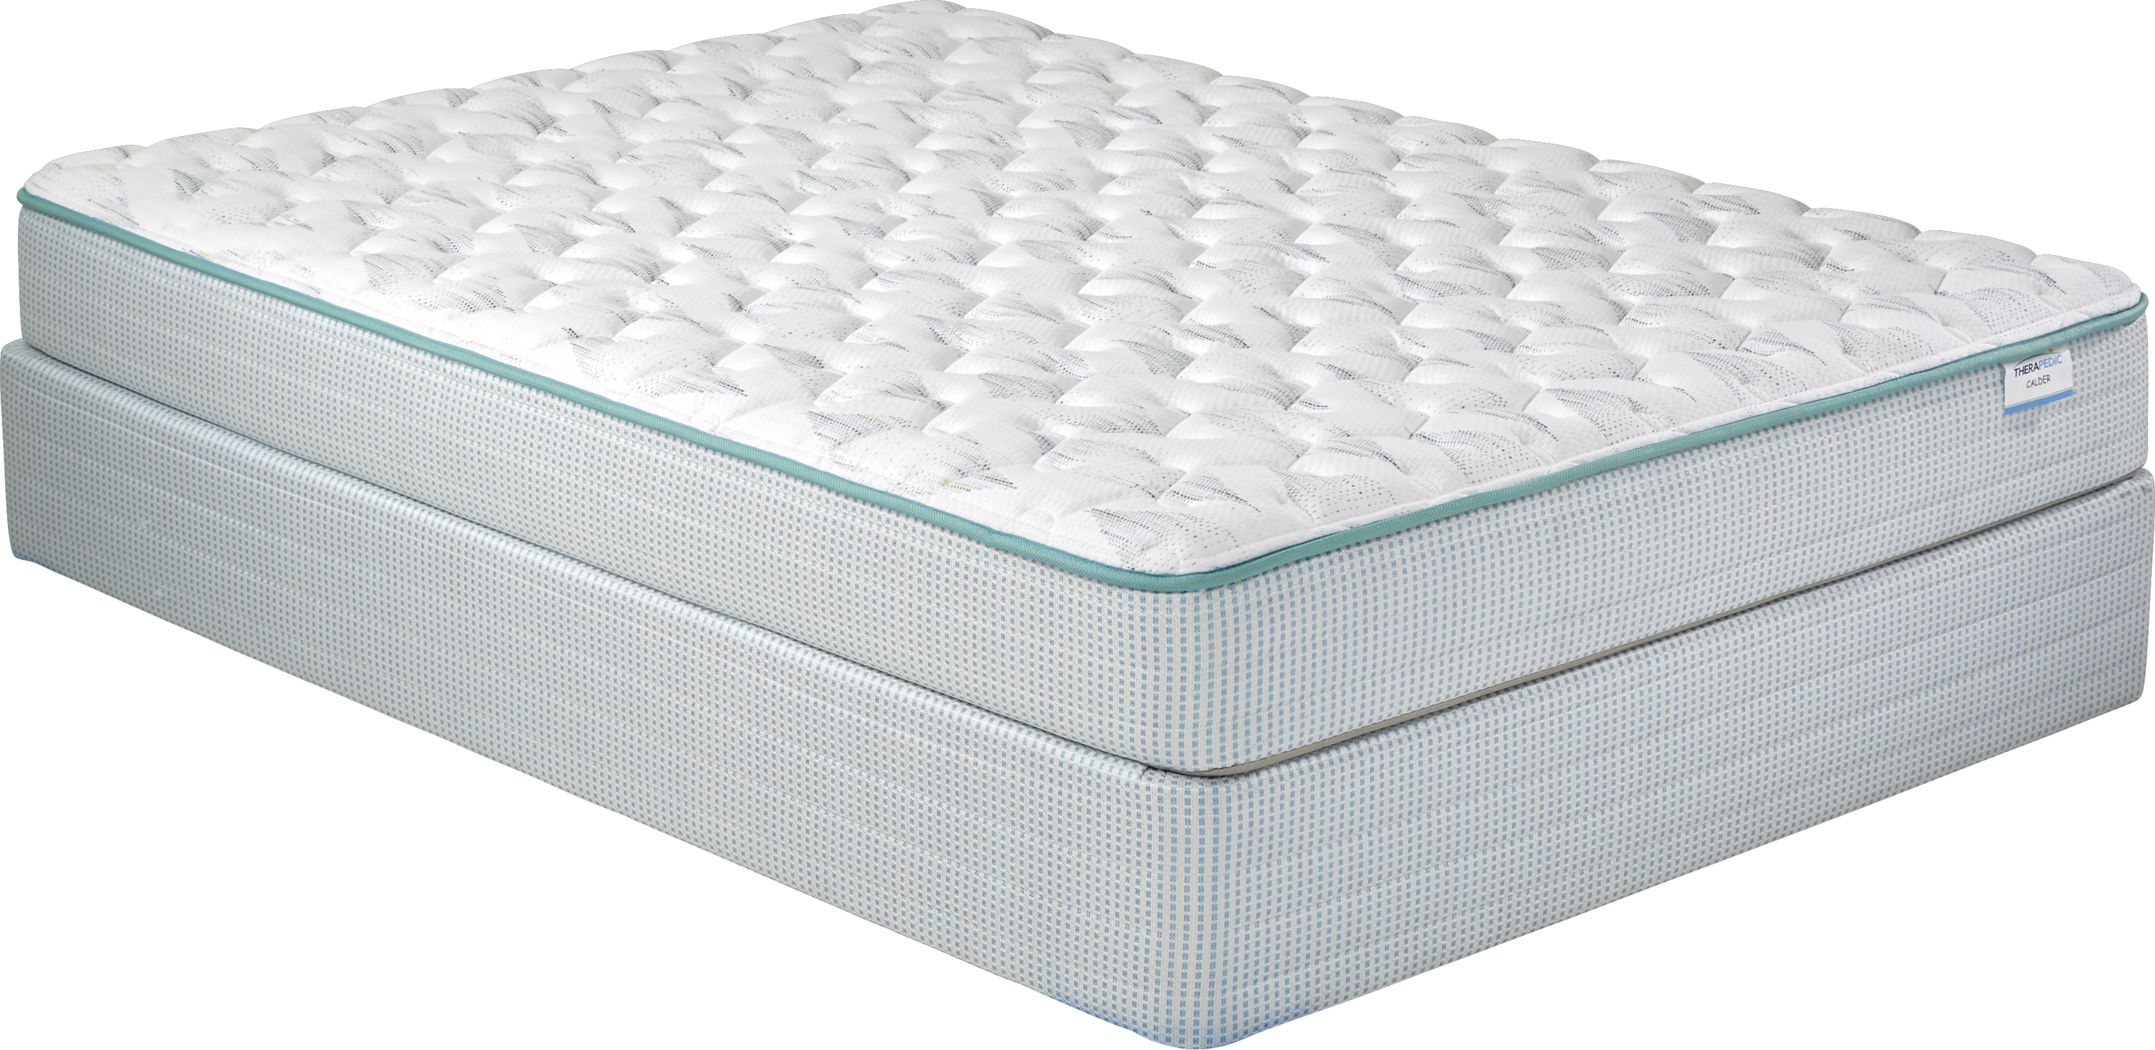 therapedic calder twin mattress reviews